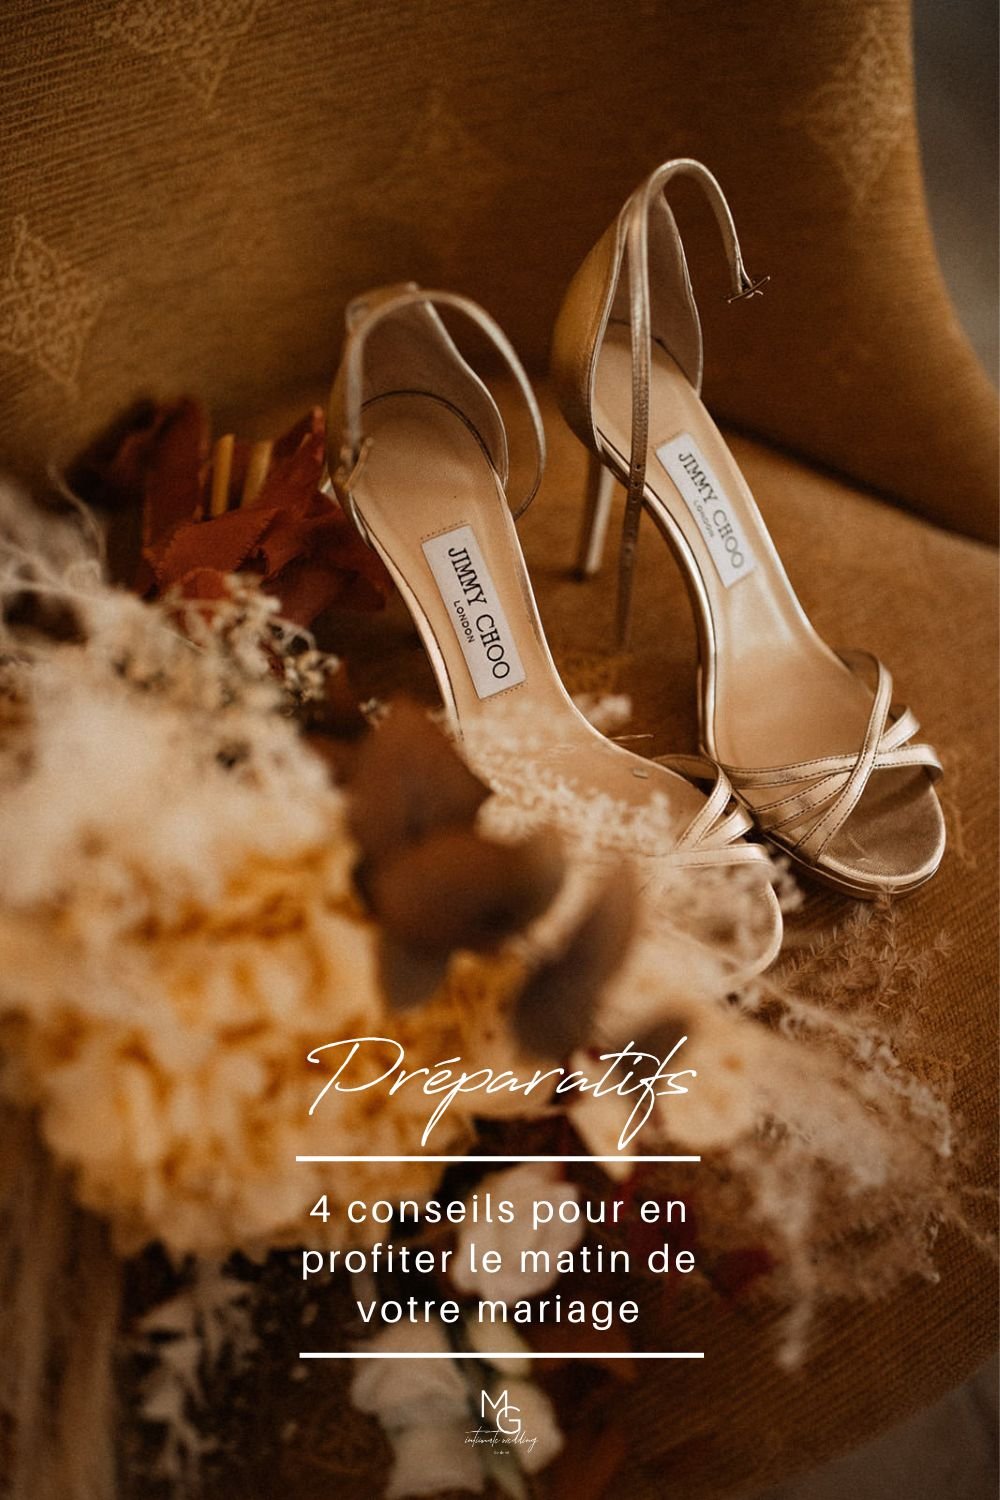 chaussures-preparatifs-mariee-jimmy-choo-nicolas-bellon-photographe-blog-conseils-mg-events-ile-de-re.jpg